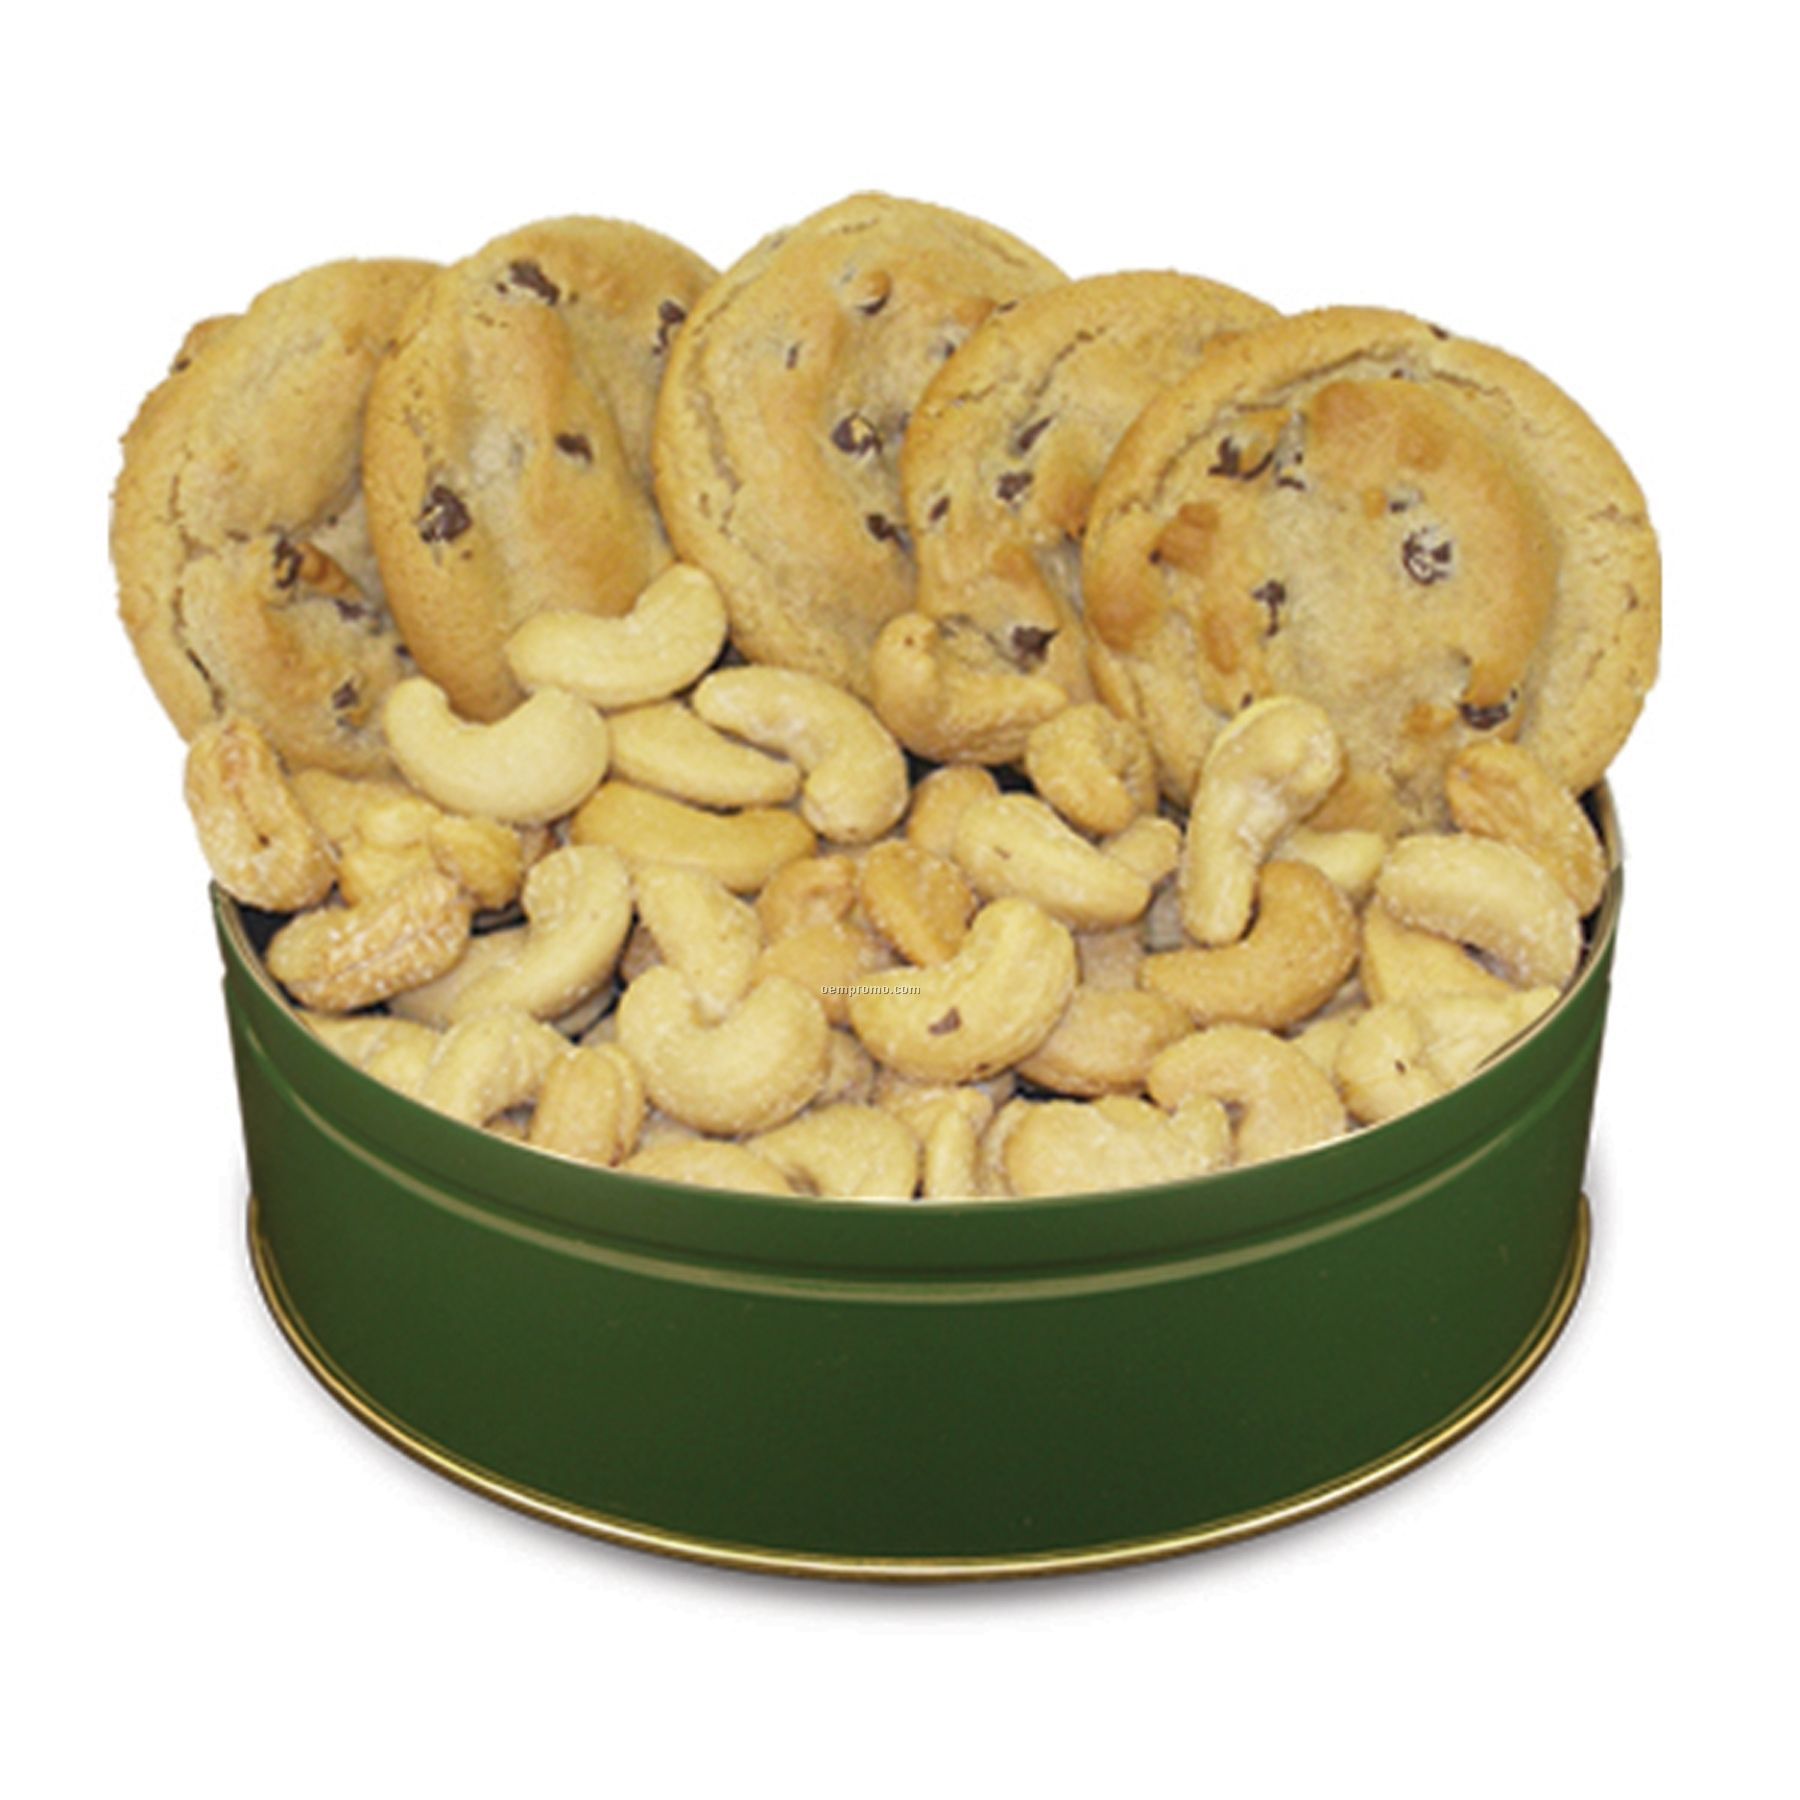 Cookie Nut Combos - Chocolate Chip (5 Cookies) Fancy Jumbo Cashews (5 Oz.)